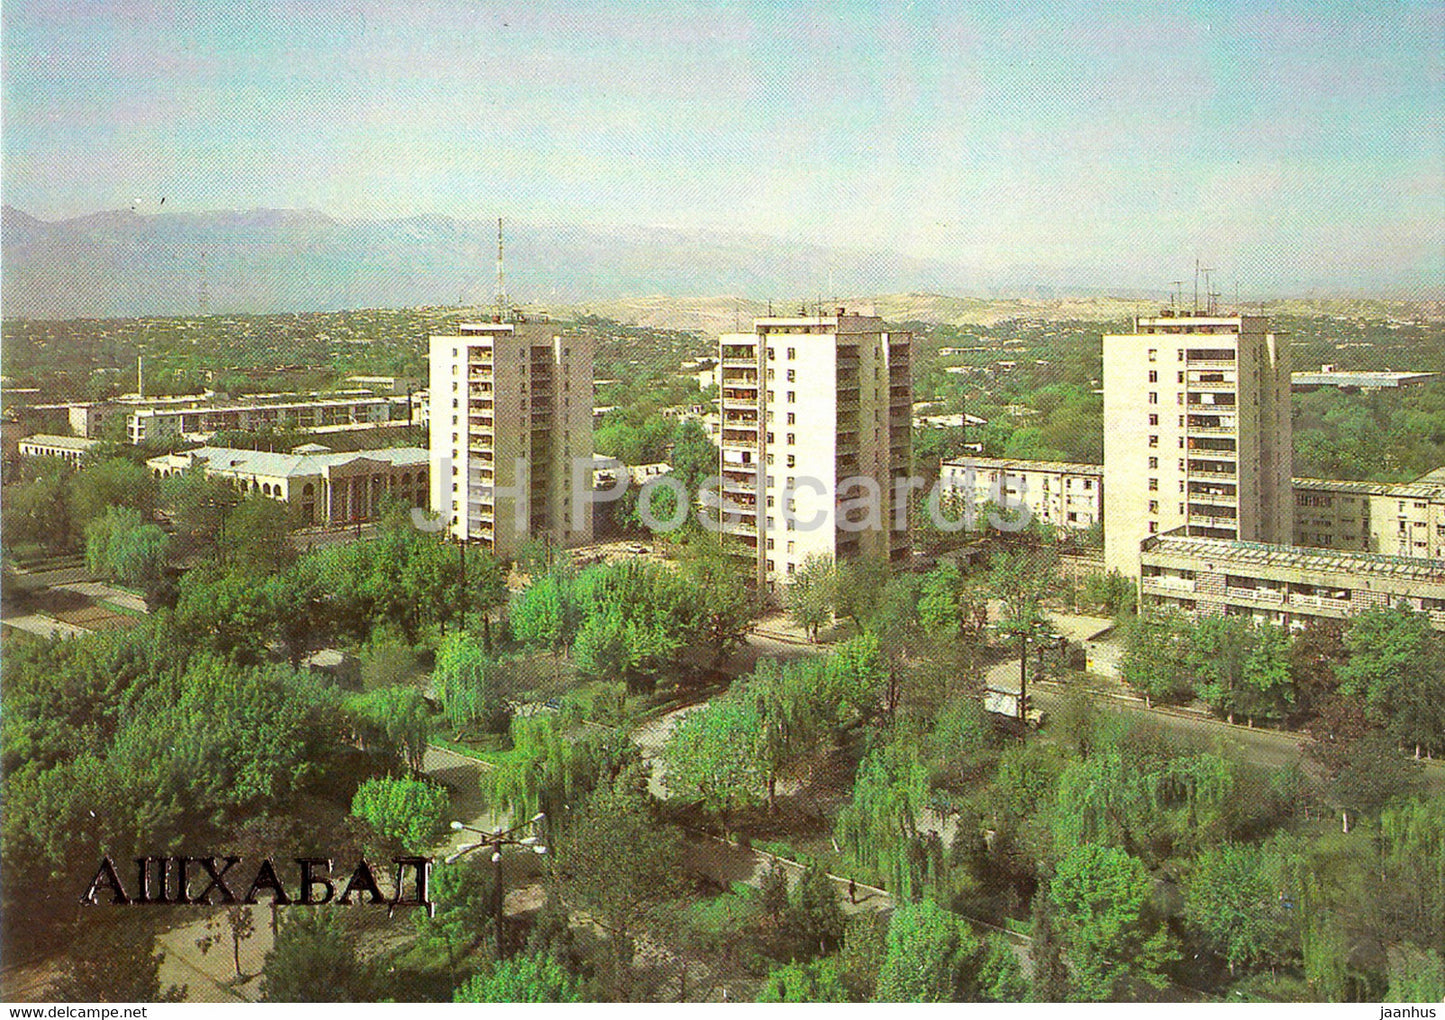 Ashgabat - Ashkhabad - A New Residental Area - 1984 - Turkmenistan USSR - unused - JH Postcards